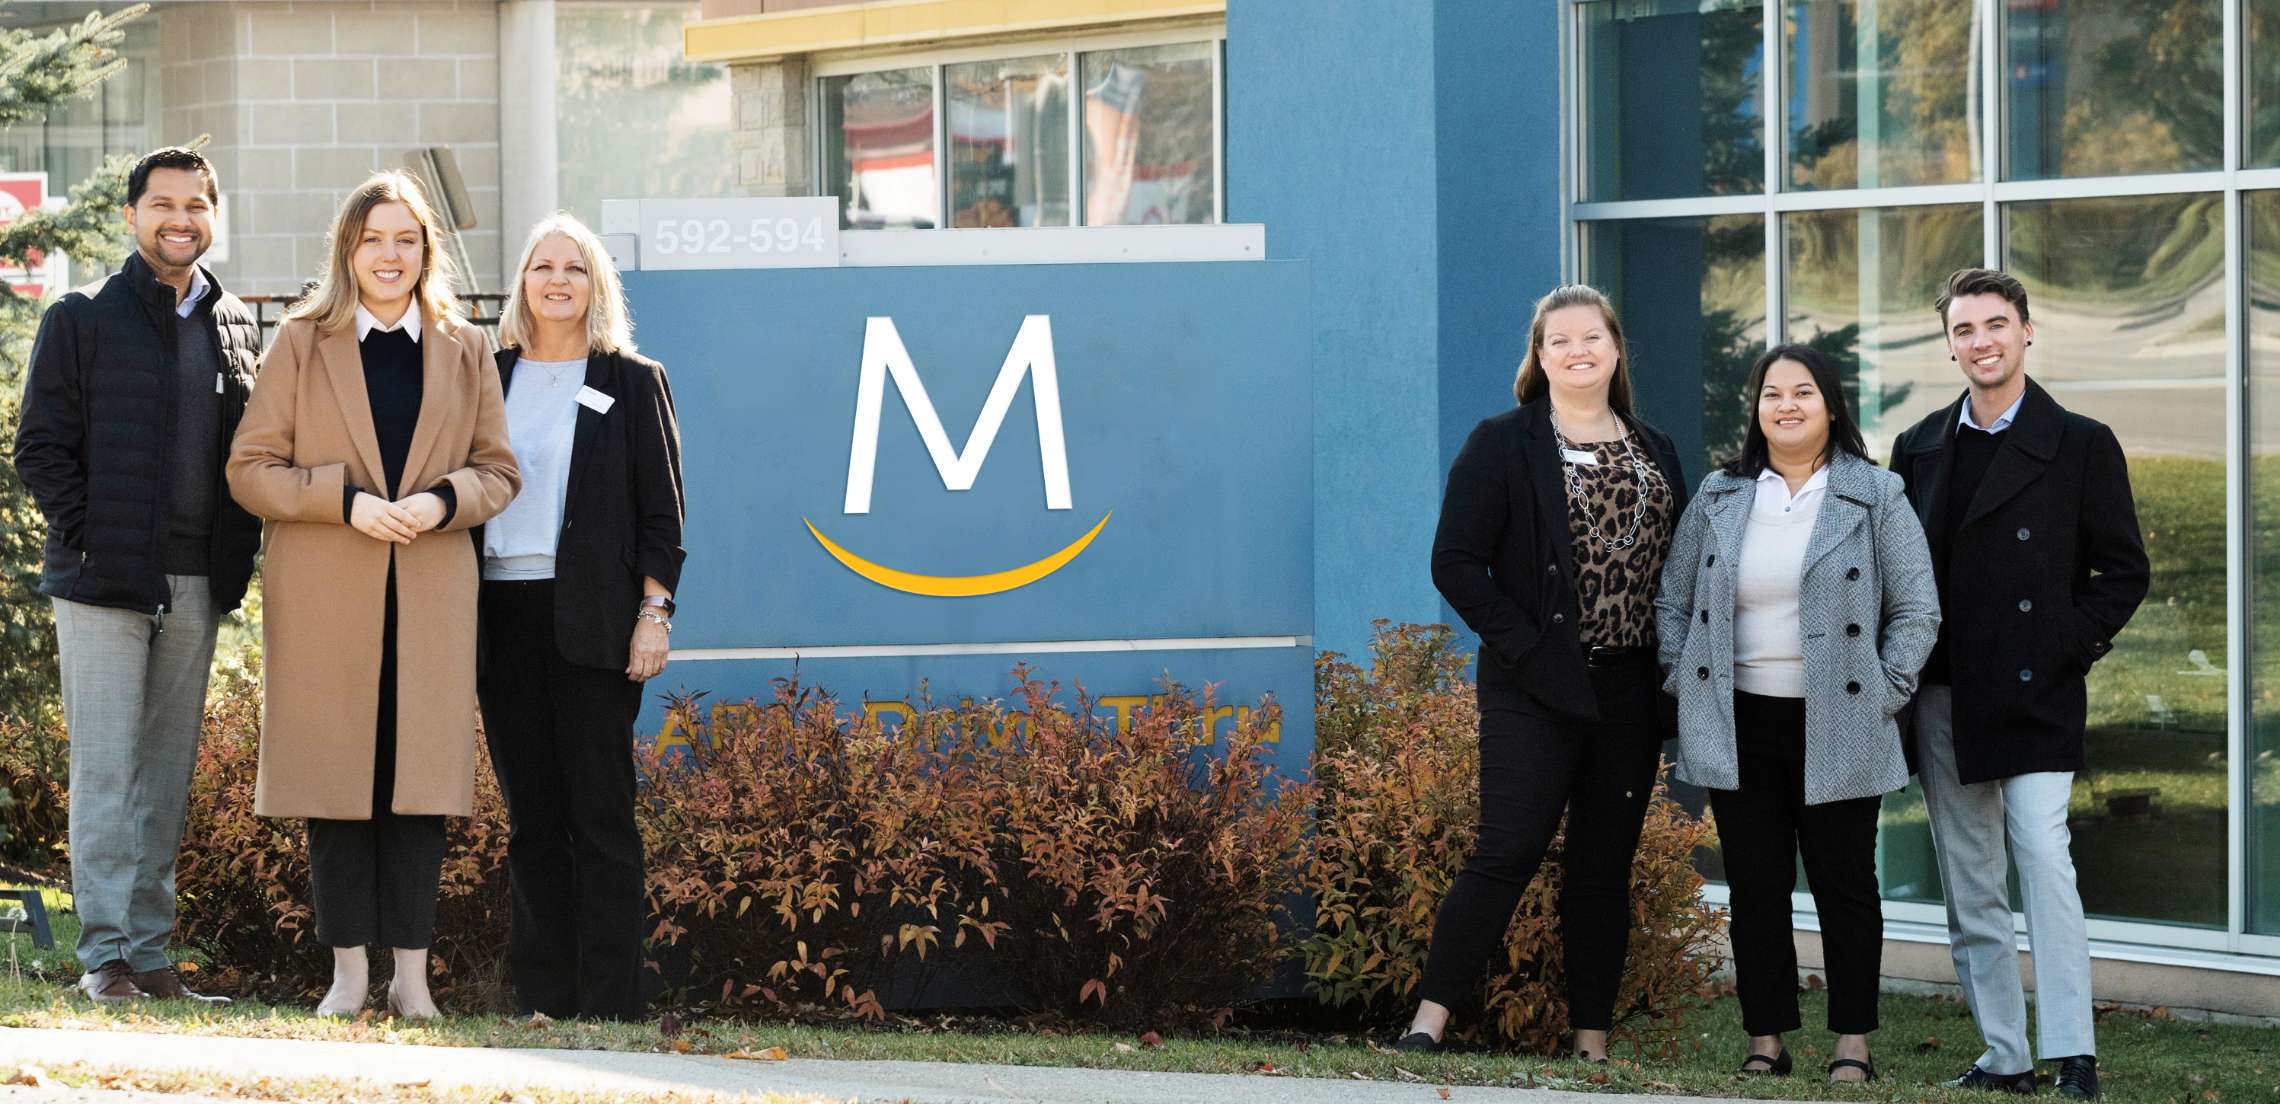 Meridian employees standing beside Meridian logo sign outdoors